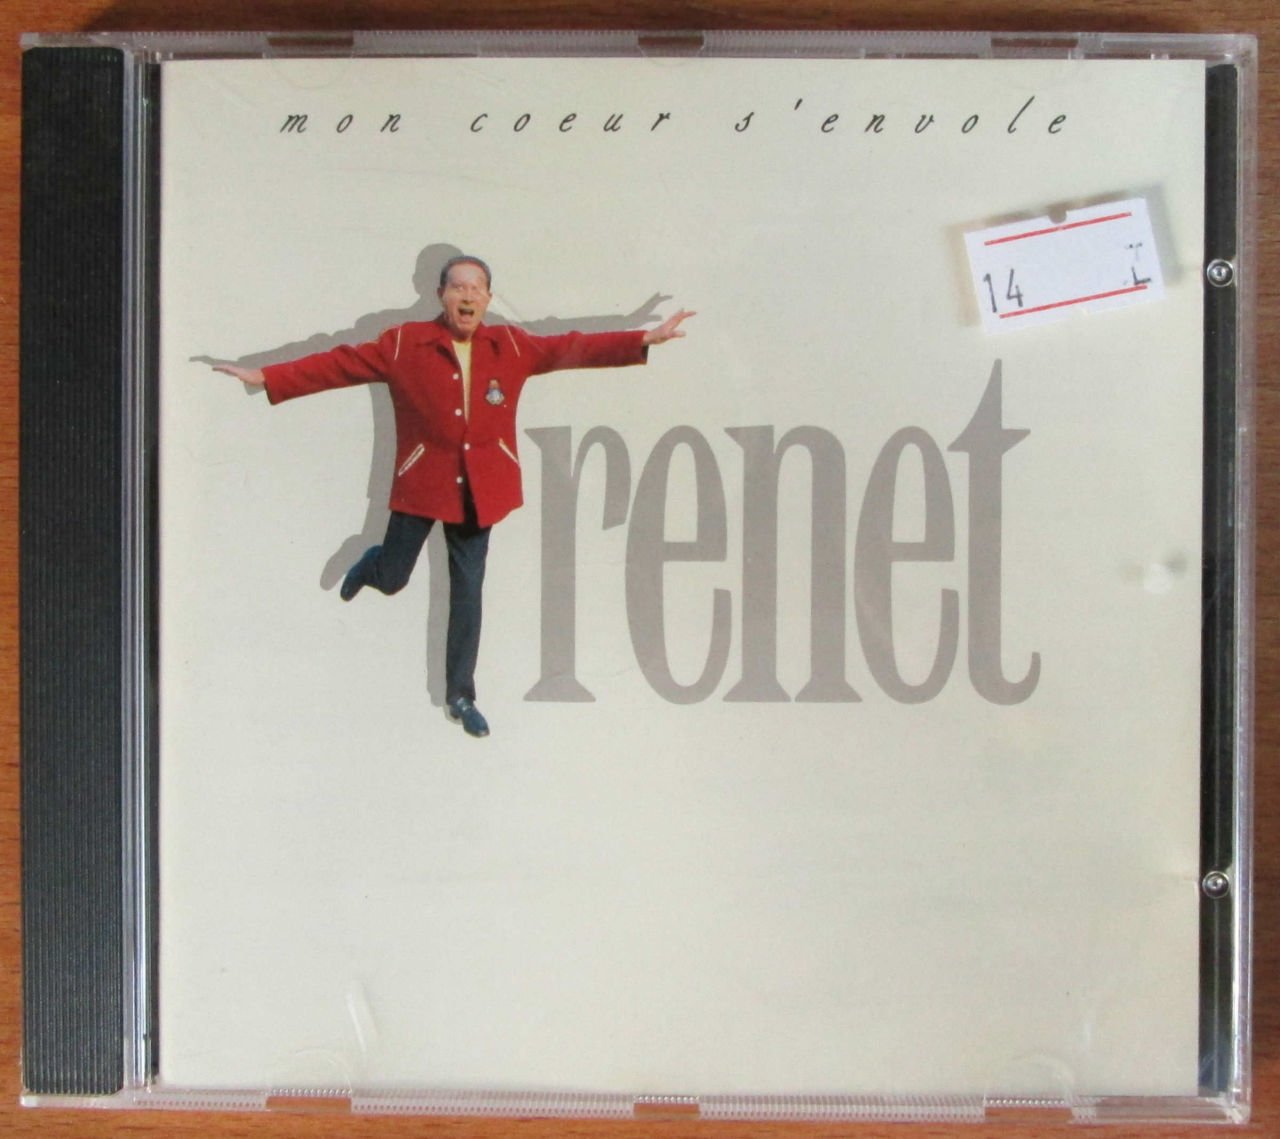 CHARLES TRENET - MON COEUR S'ENVOLE - CD 2.EL